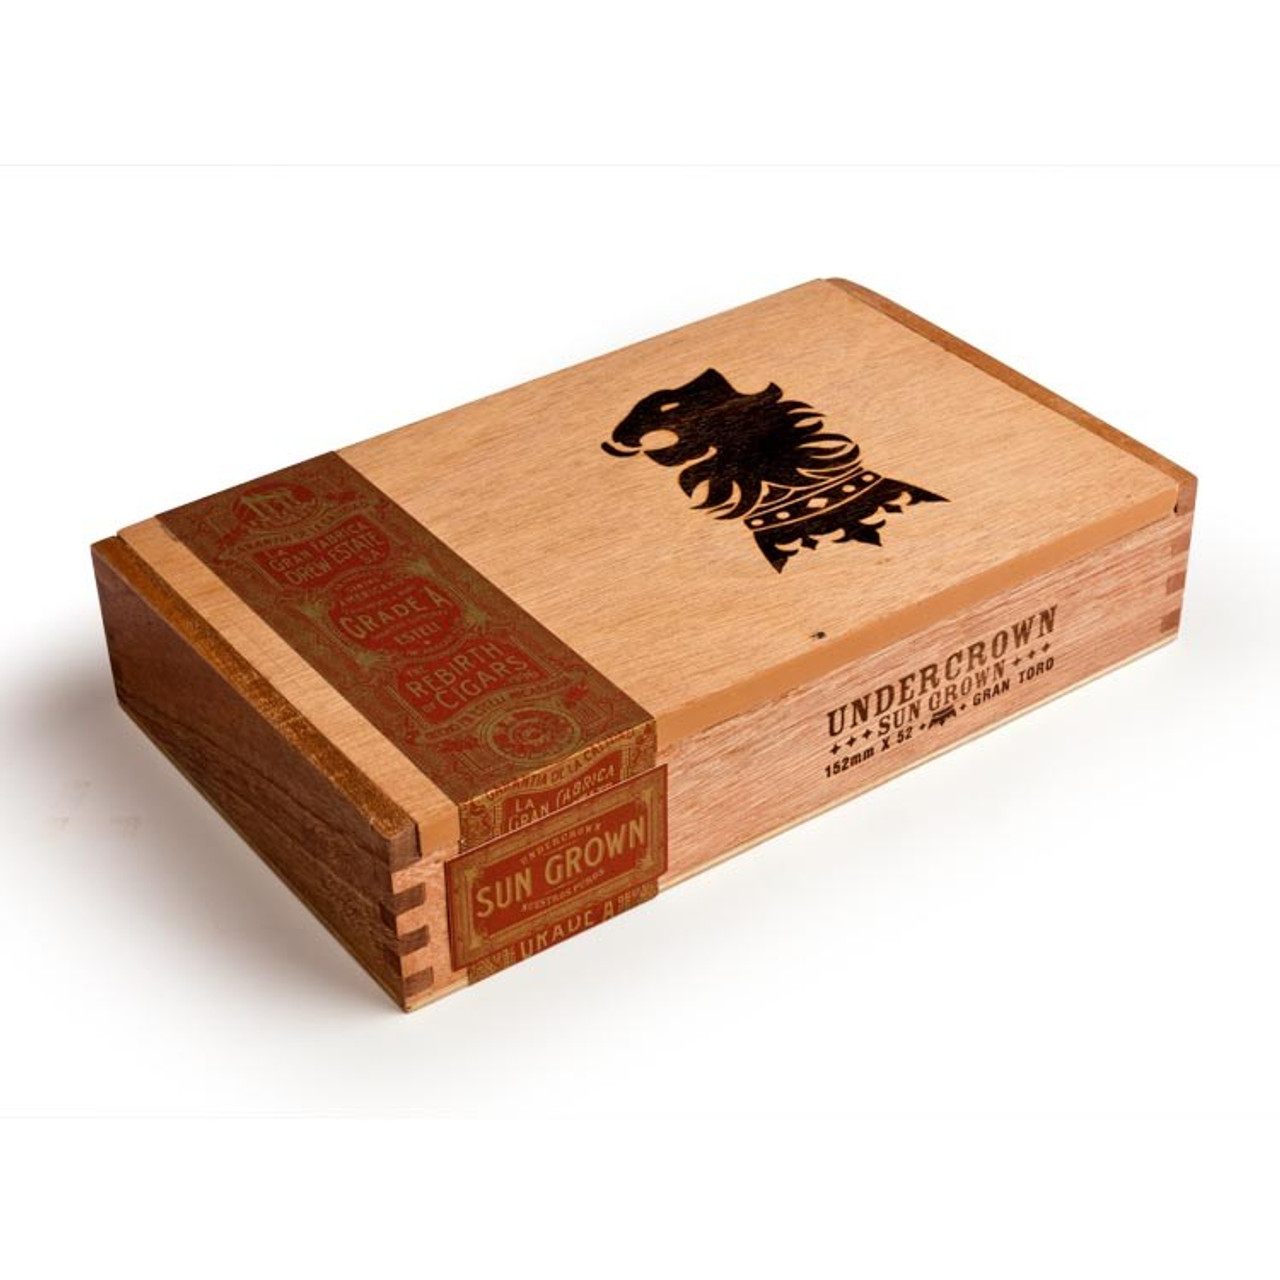 Undercrown Sungrown Double Corona Cigars - 7 x 54 (Box of 25) *Box